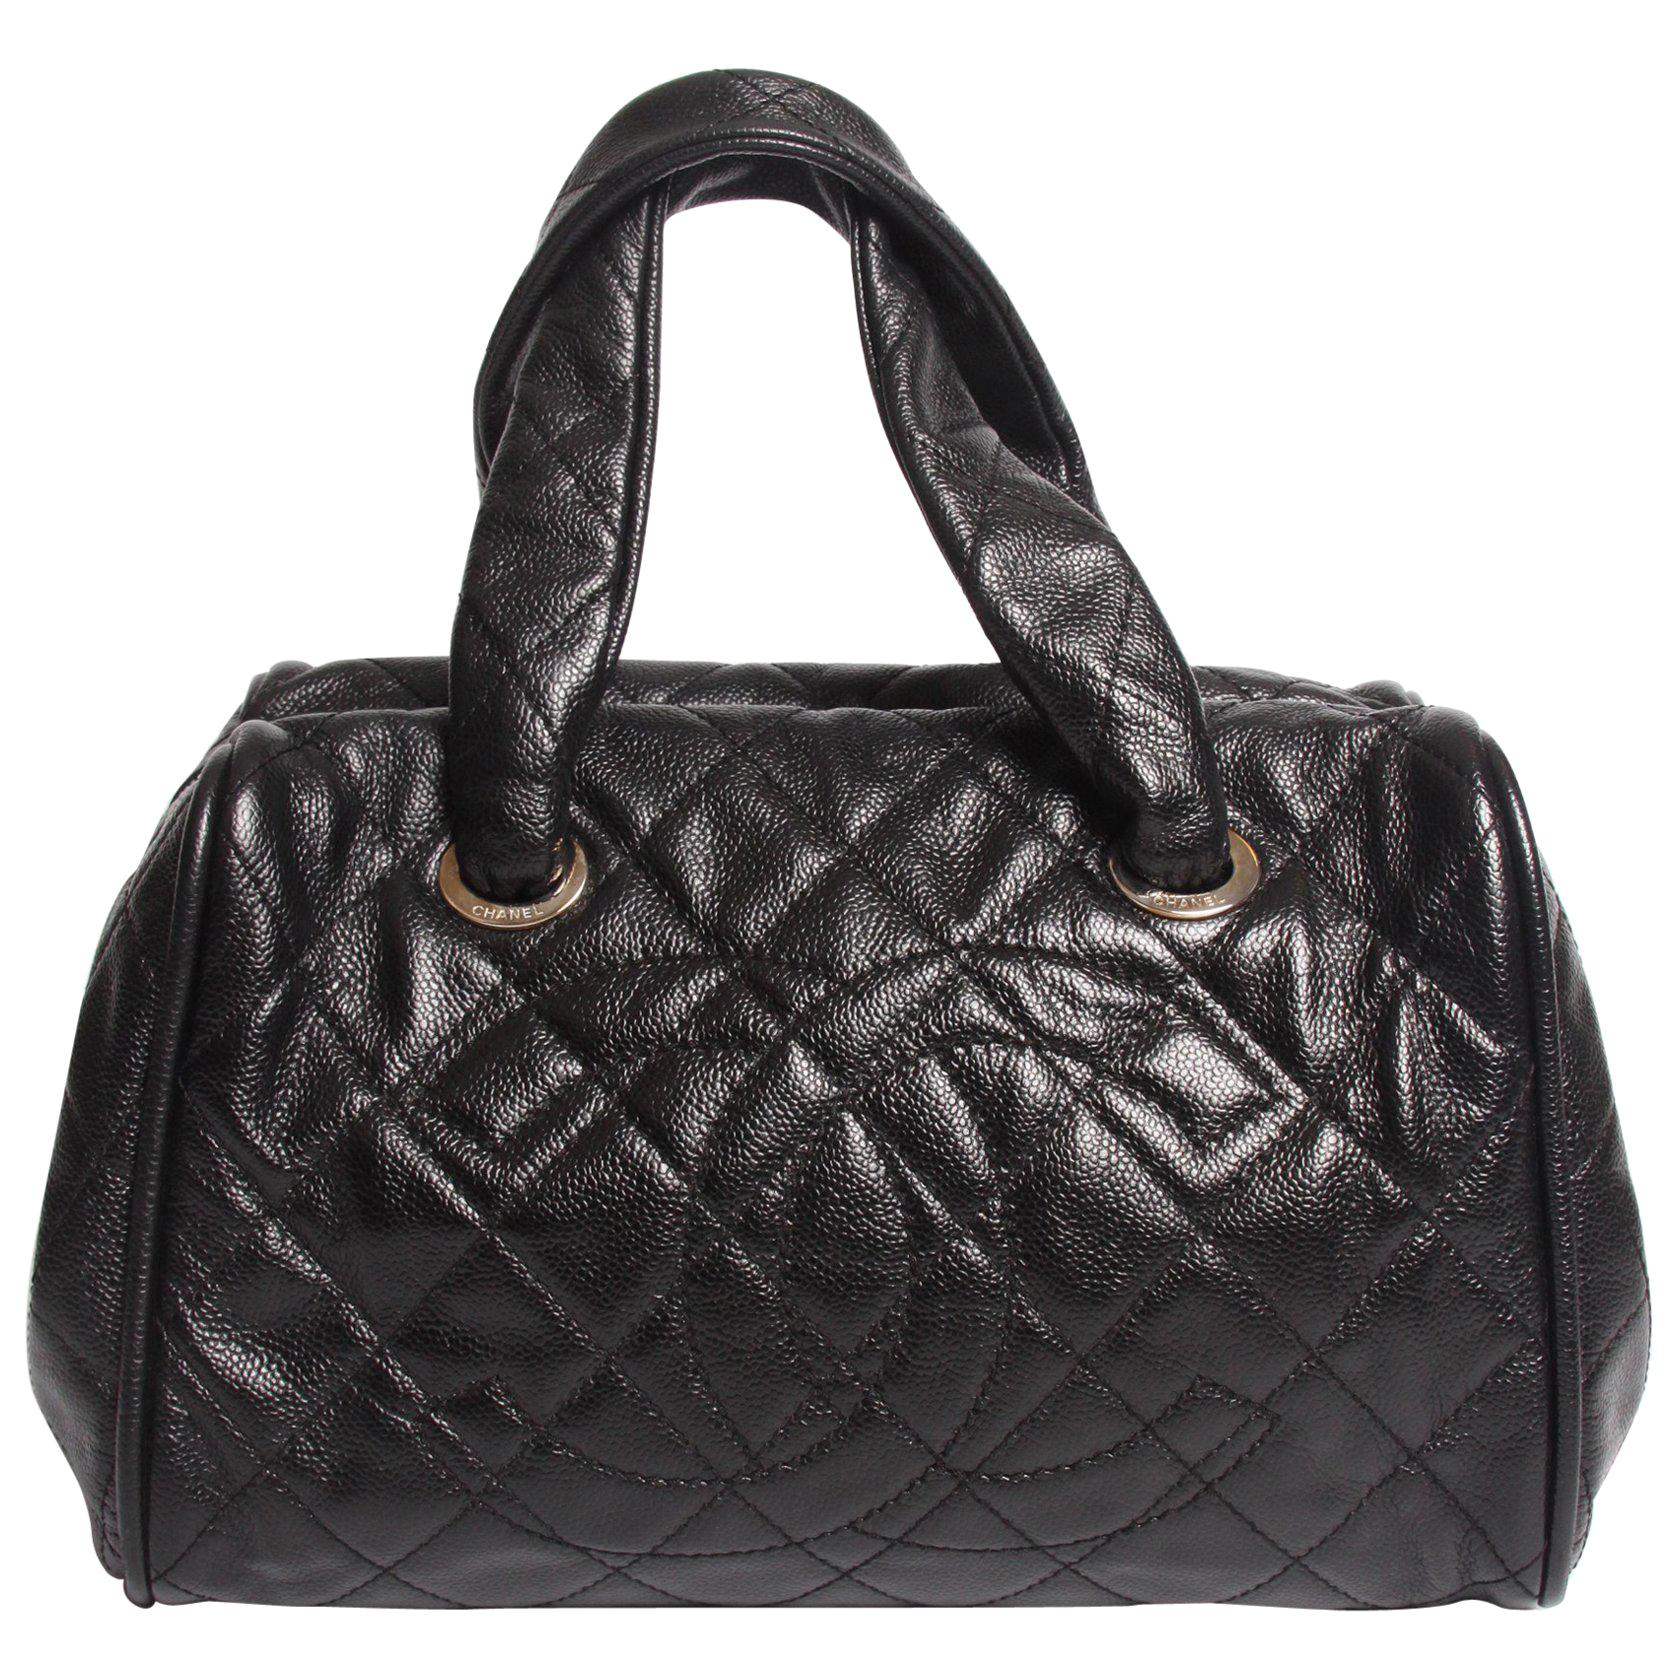 Chanel Top Handle Shopper Bag - black caviar leather  For Sale